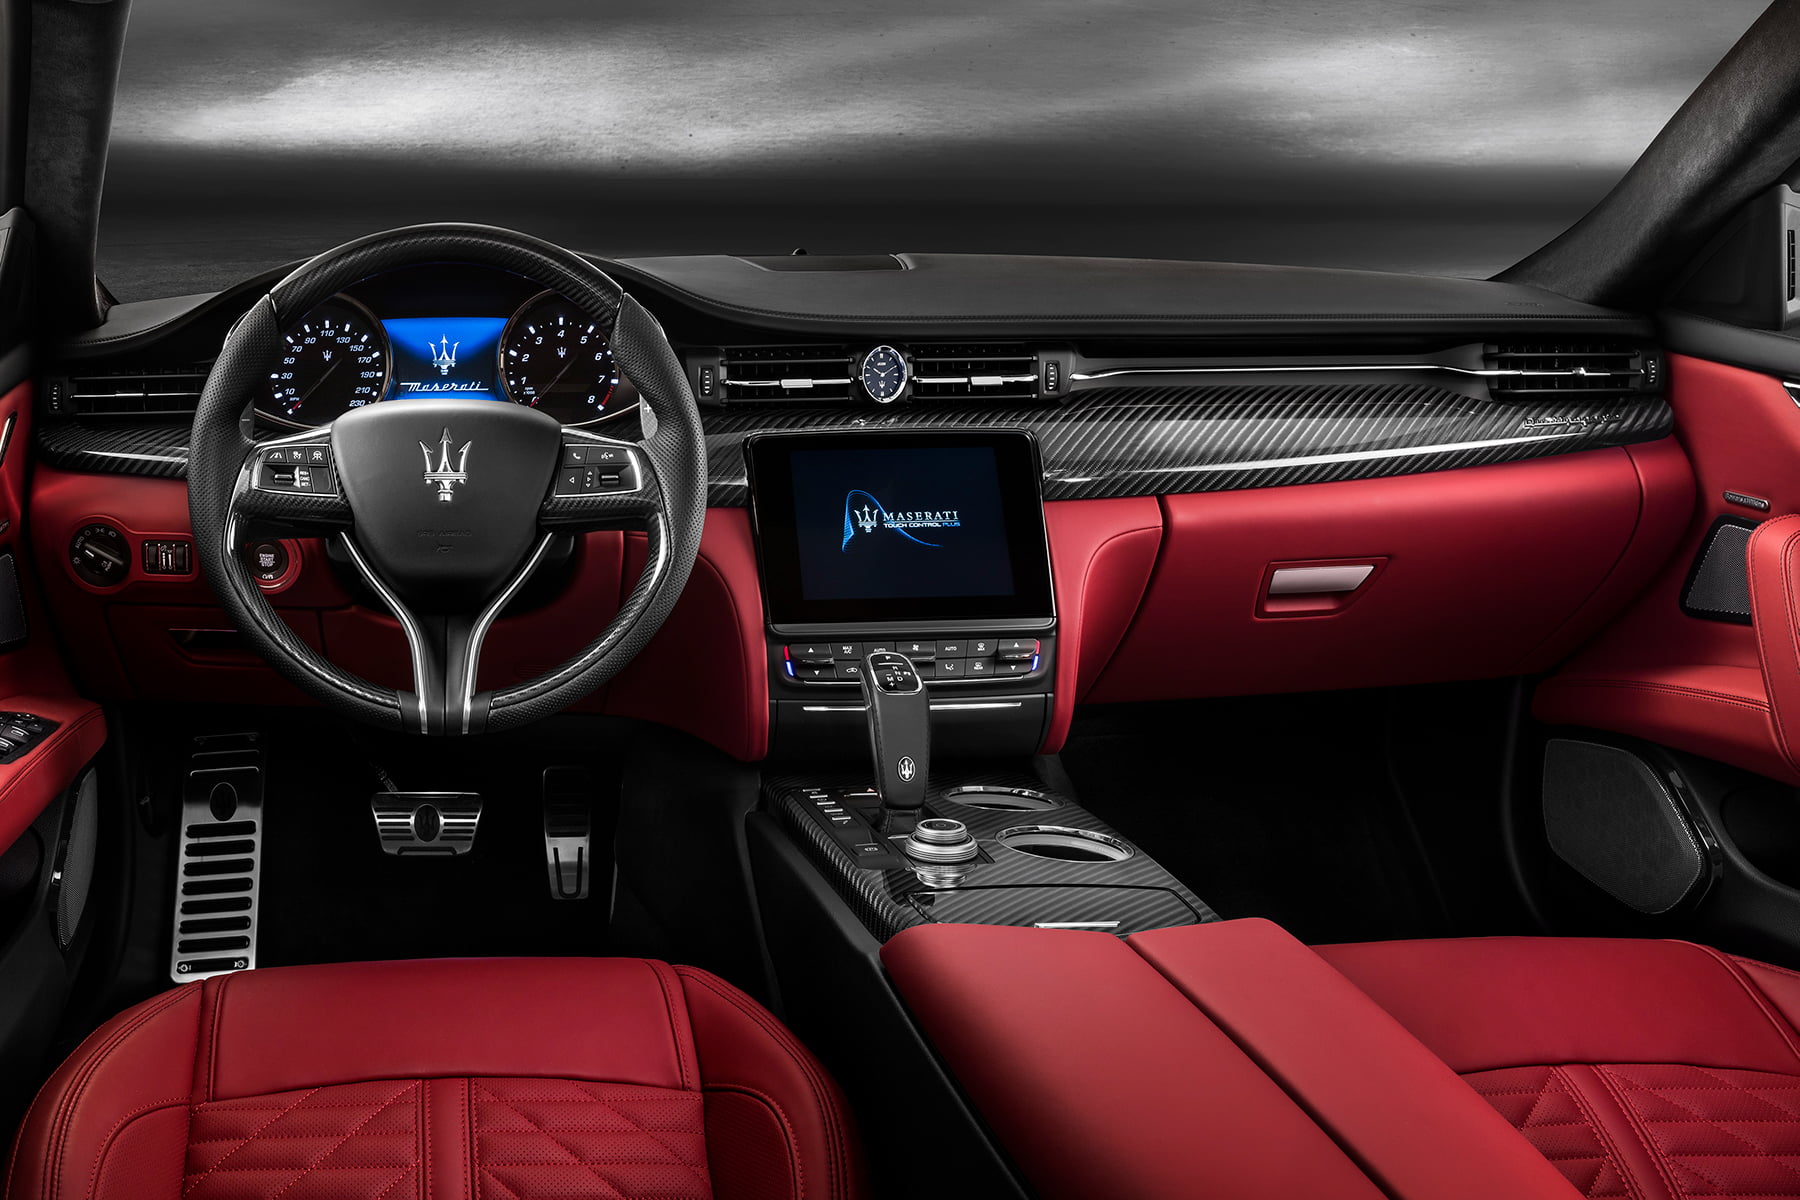 Maserati Quattroporte (2013 onwards) – interior and dashboard